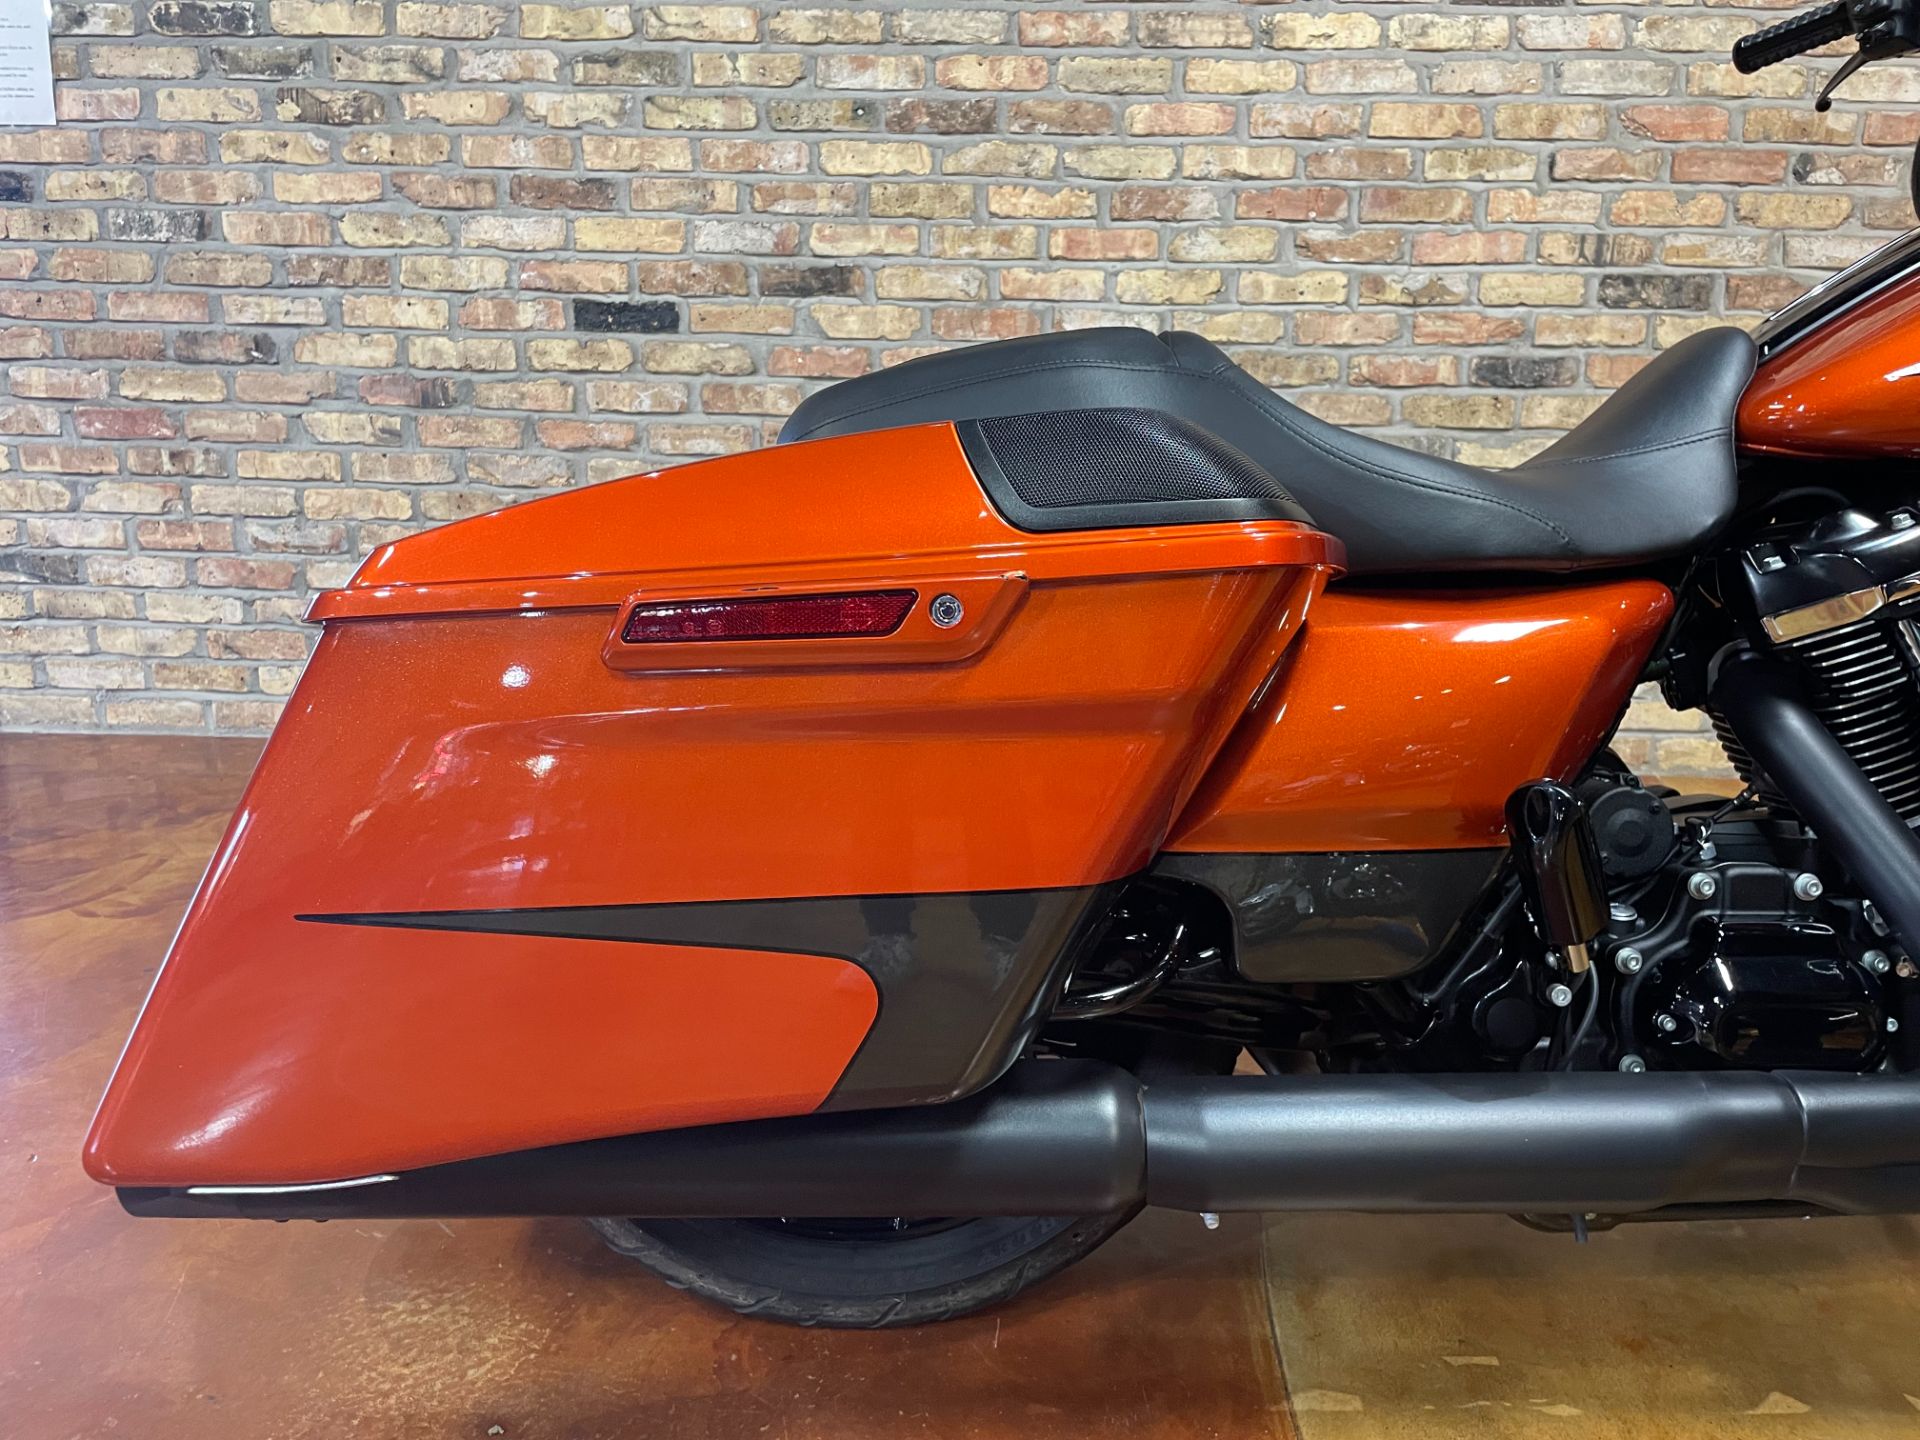 2020 Harley-Davidson Street Glide® Special in Big Bend, Wisconsin - Photo 11